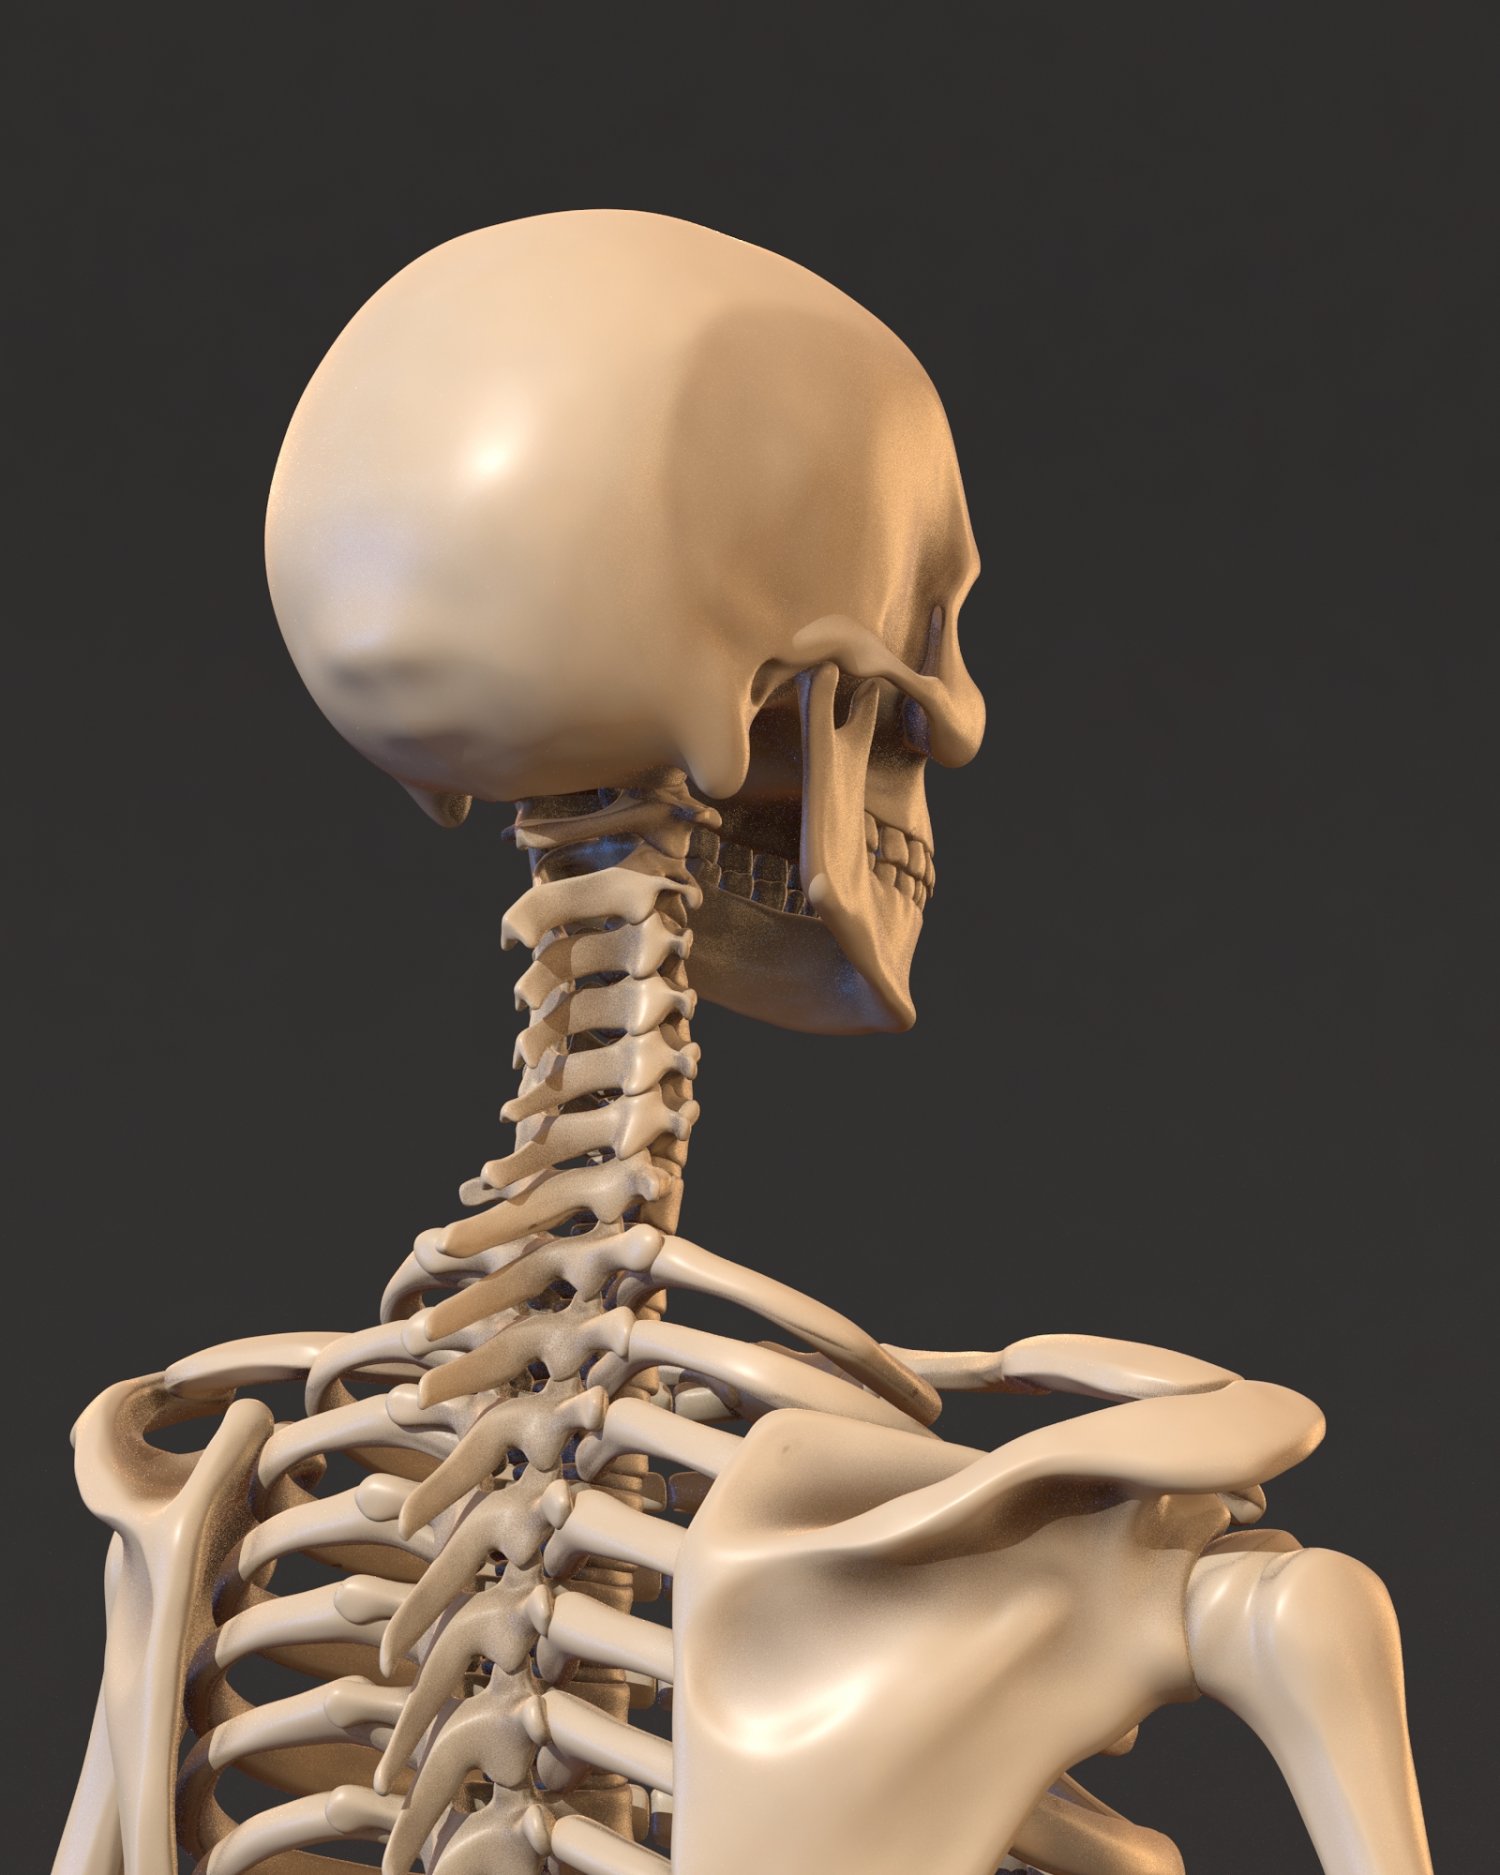 Три д скелет человека. Скелет 3дmax. Human Skeleton 3d model. Скелет 3d анатомия. Skeleton 3d model.